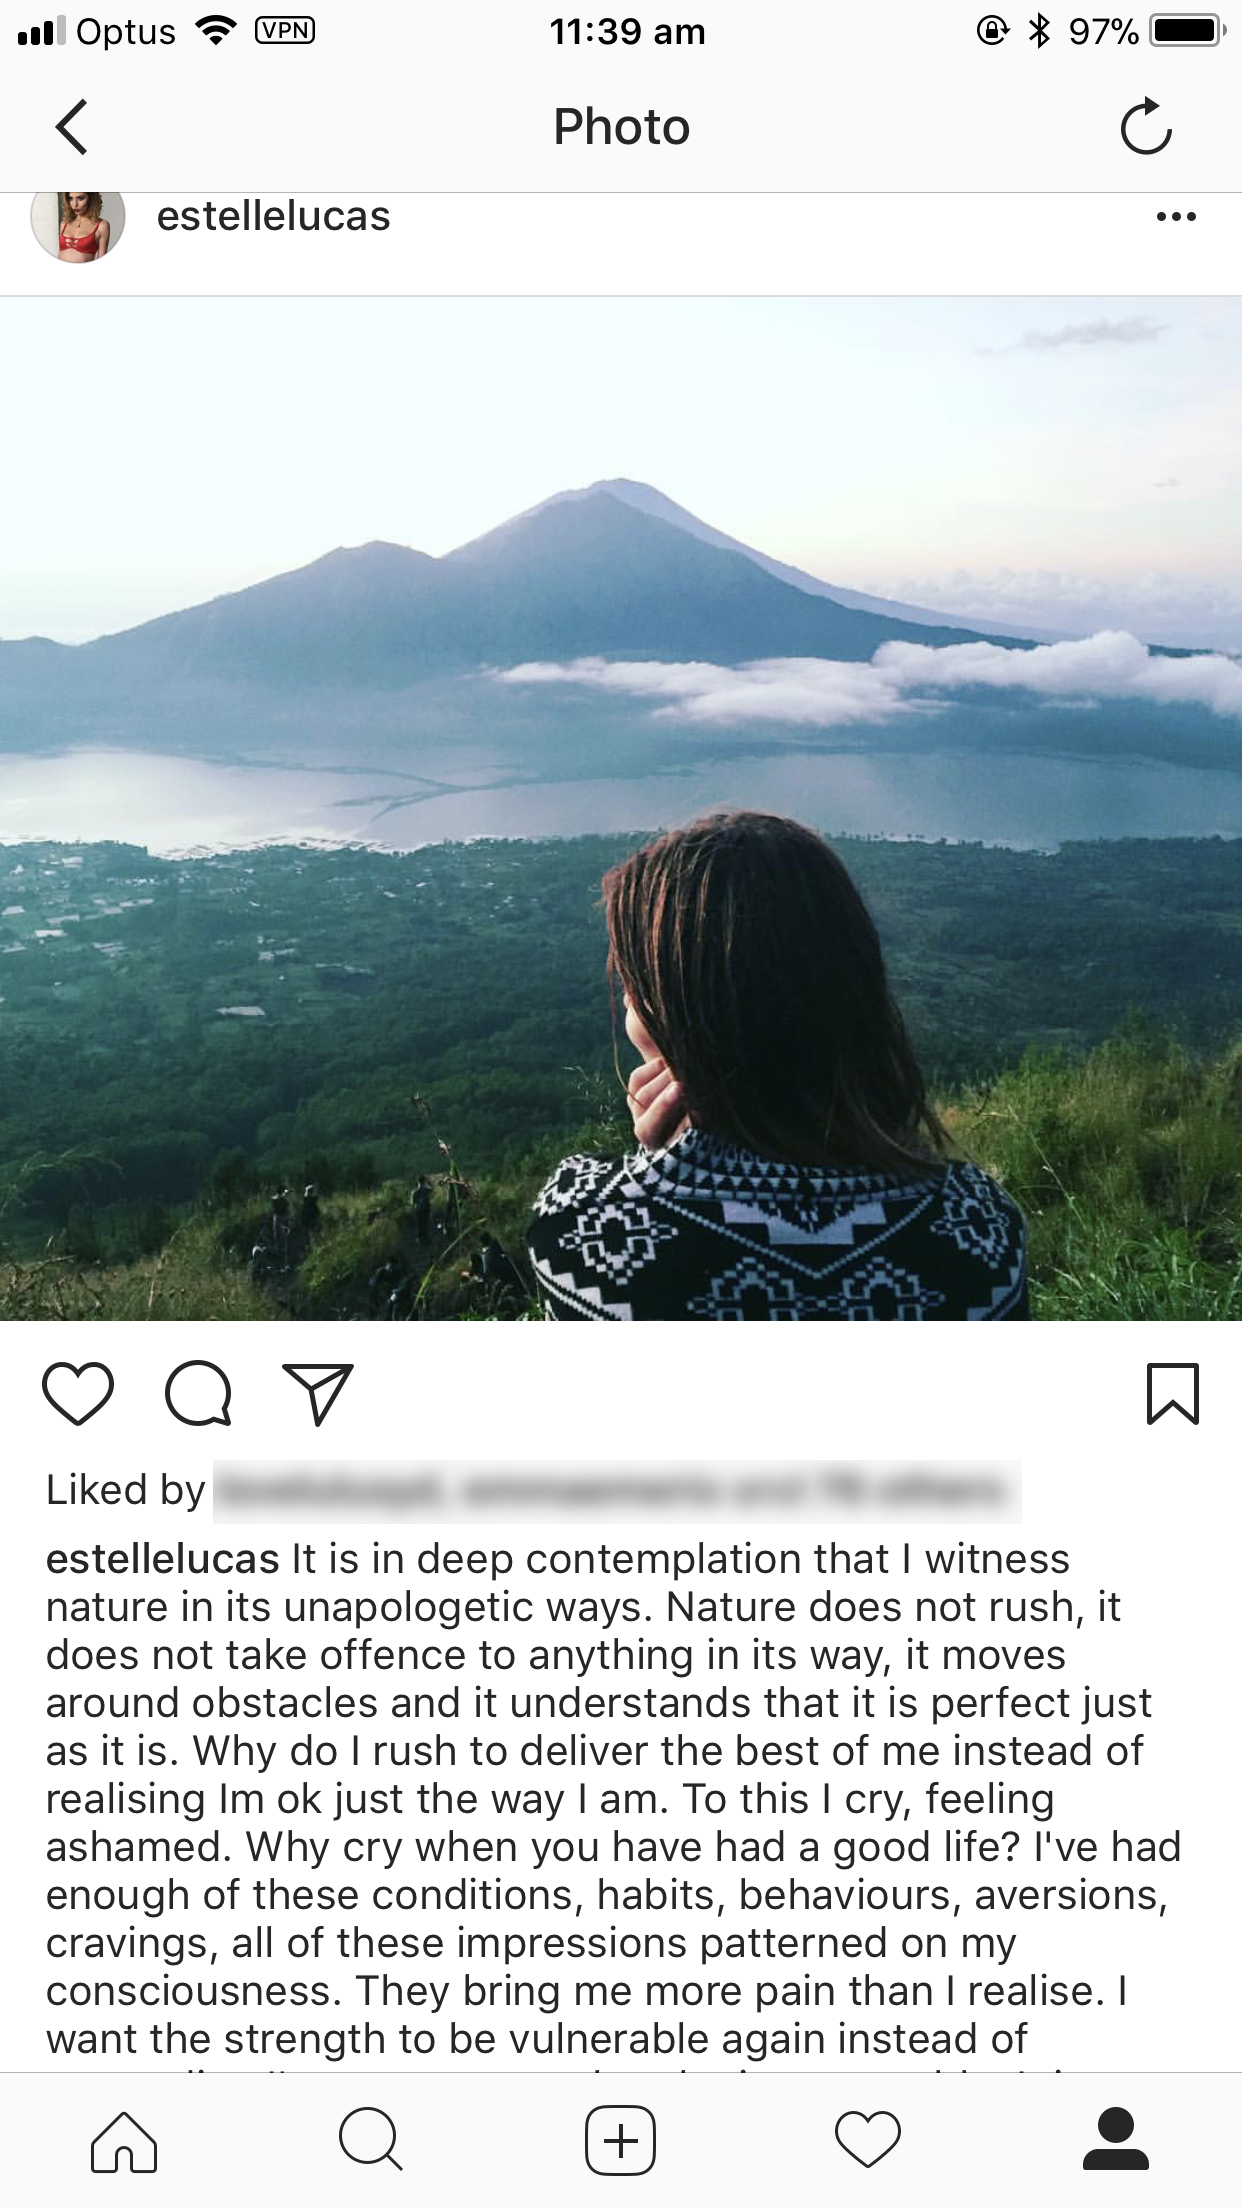 An Instagram post.